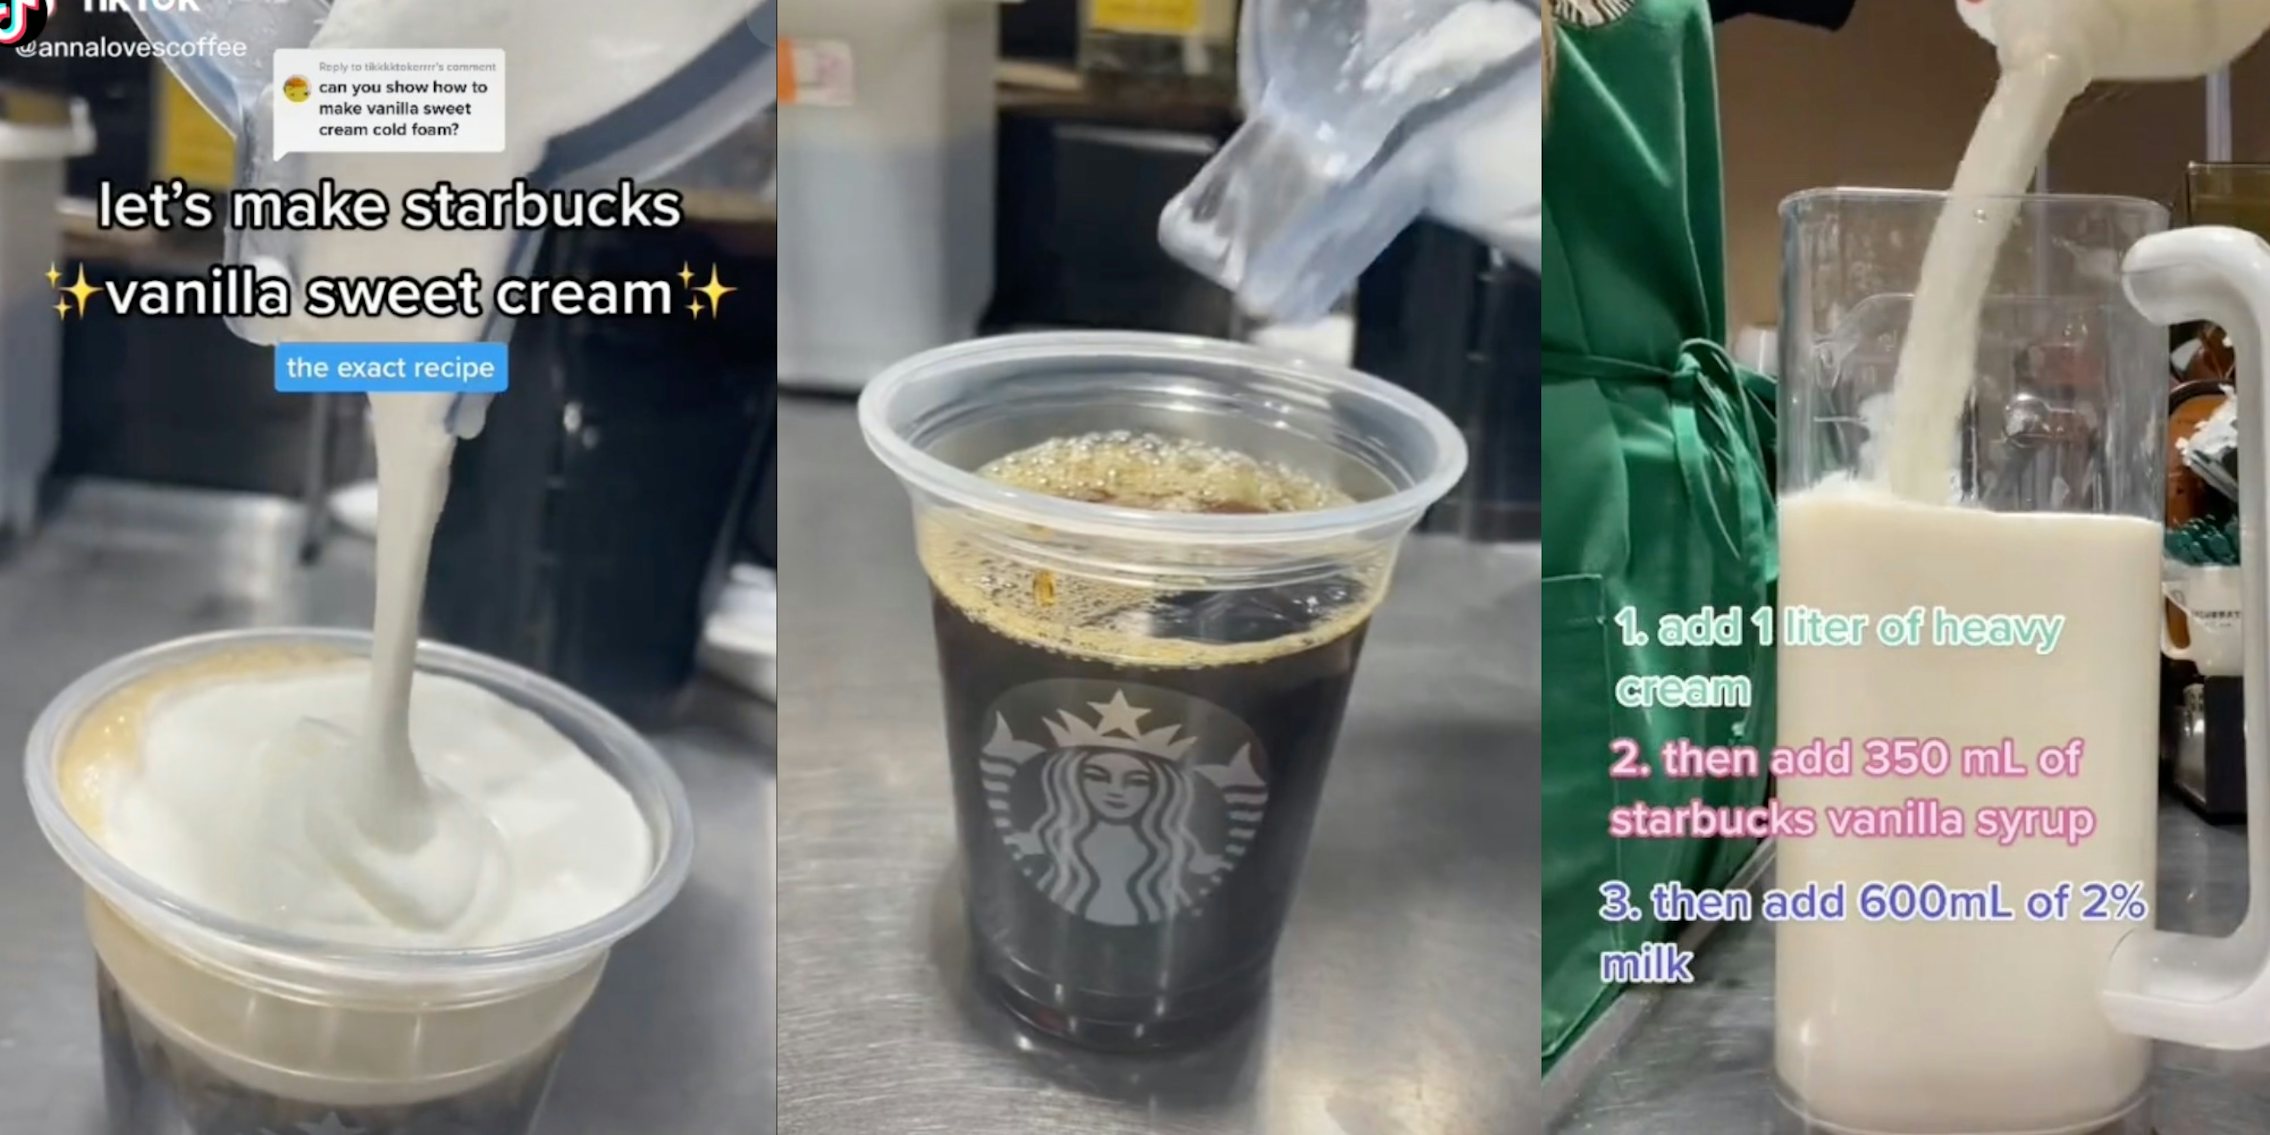 https://uploads.dailydot.com/2022/01/TikTok-Starbucks.jpg?q=65&auto=format&w=2270&ar=2:1&fit=crop